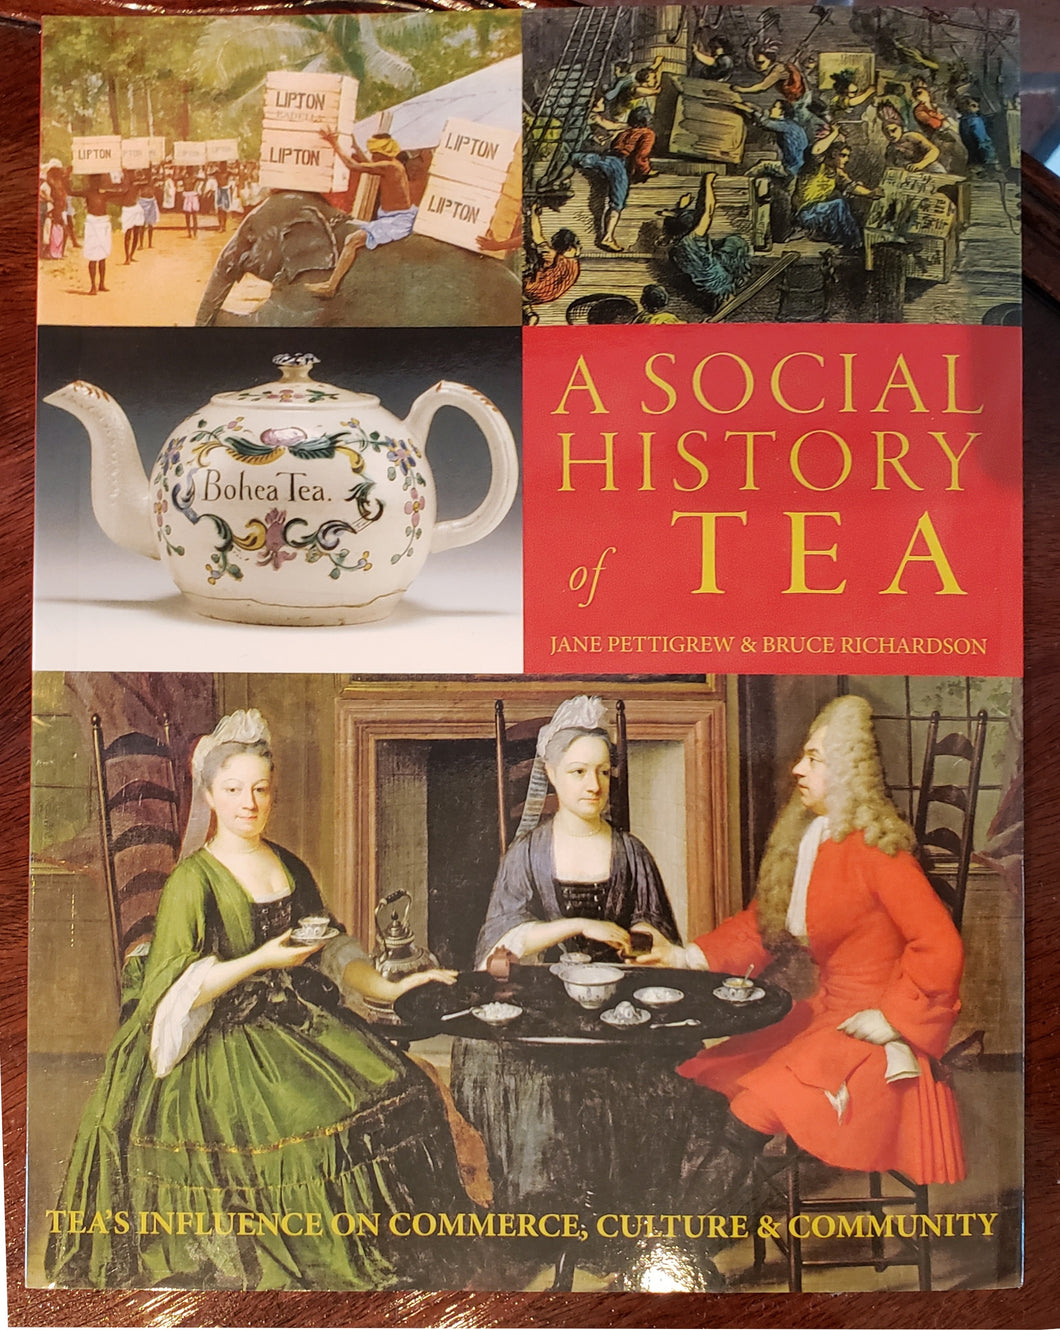 A Social History of Tea - by Jane Pettigrew & Bruce Richardson